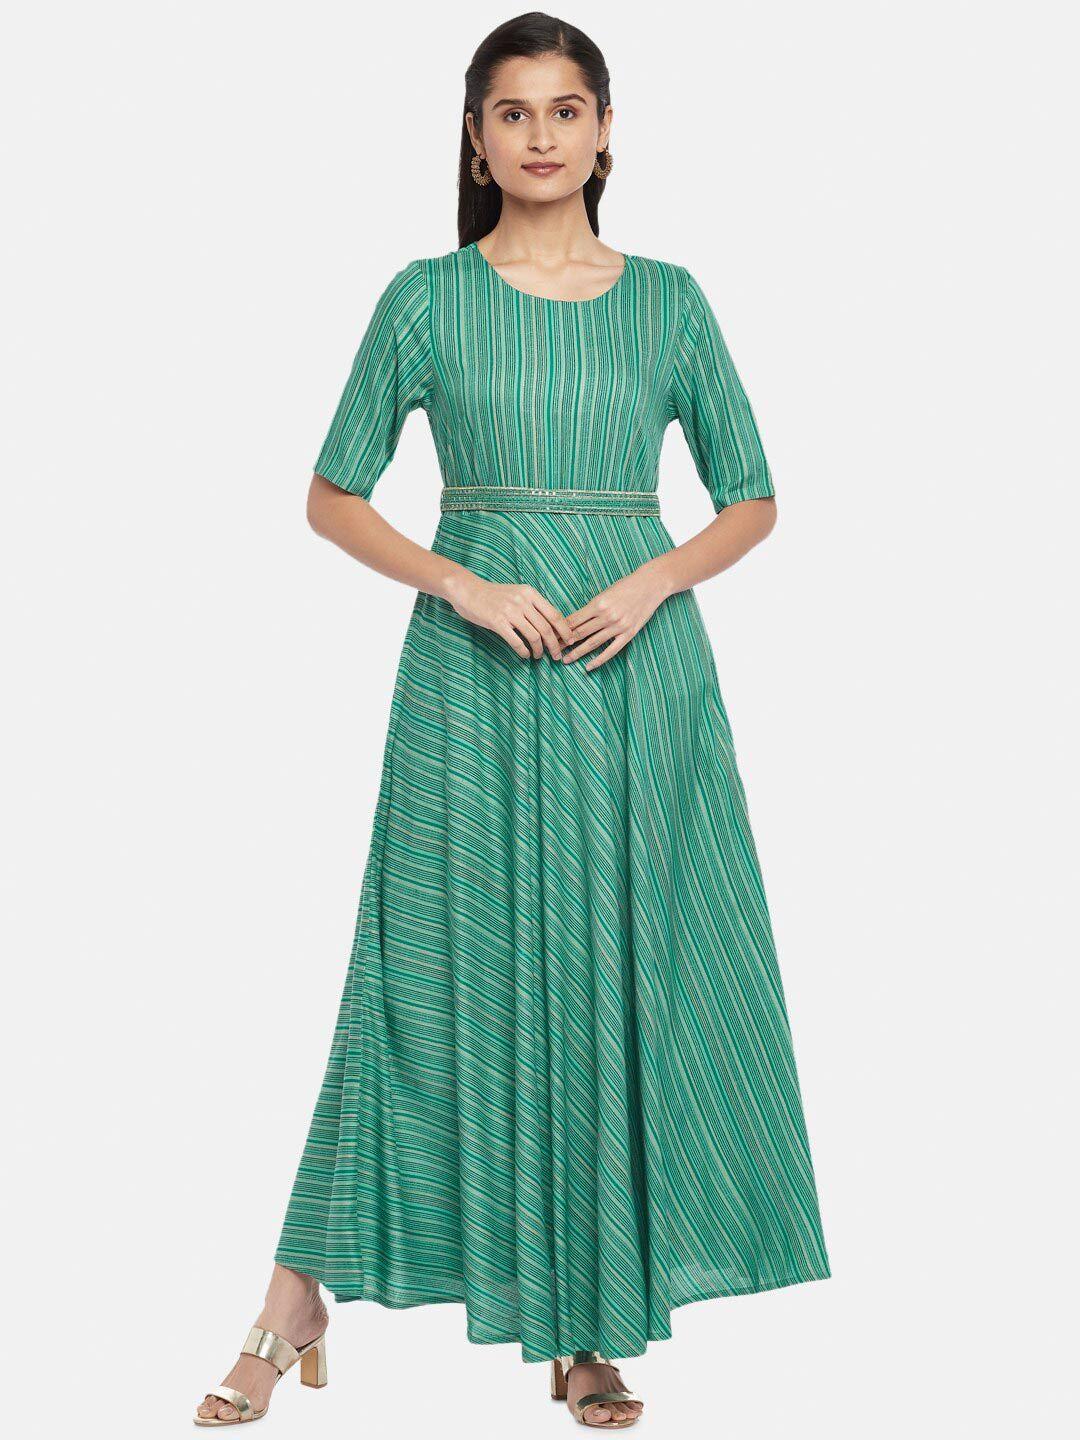 akkriti-by-pantaloons-women-green-striped-ethnic-maxi-dress